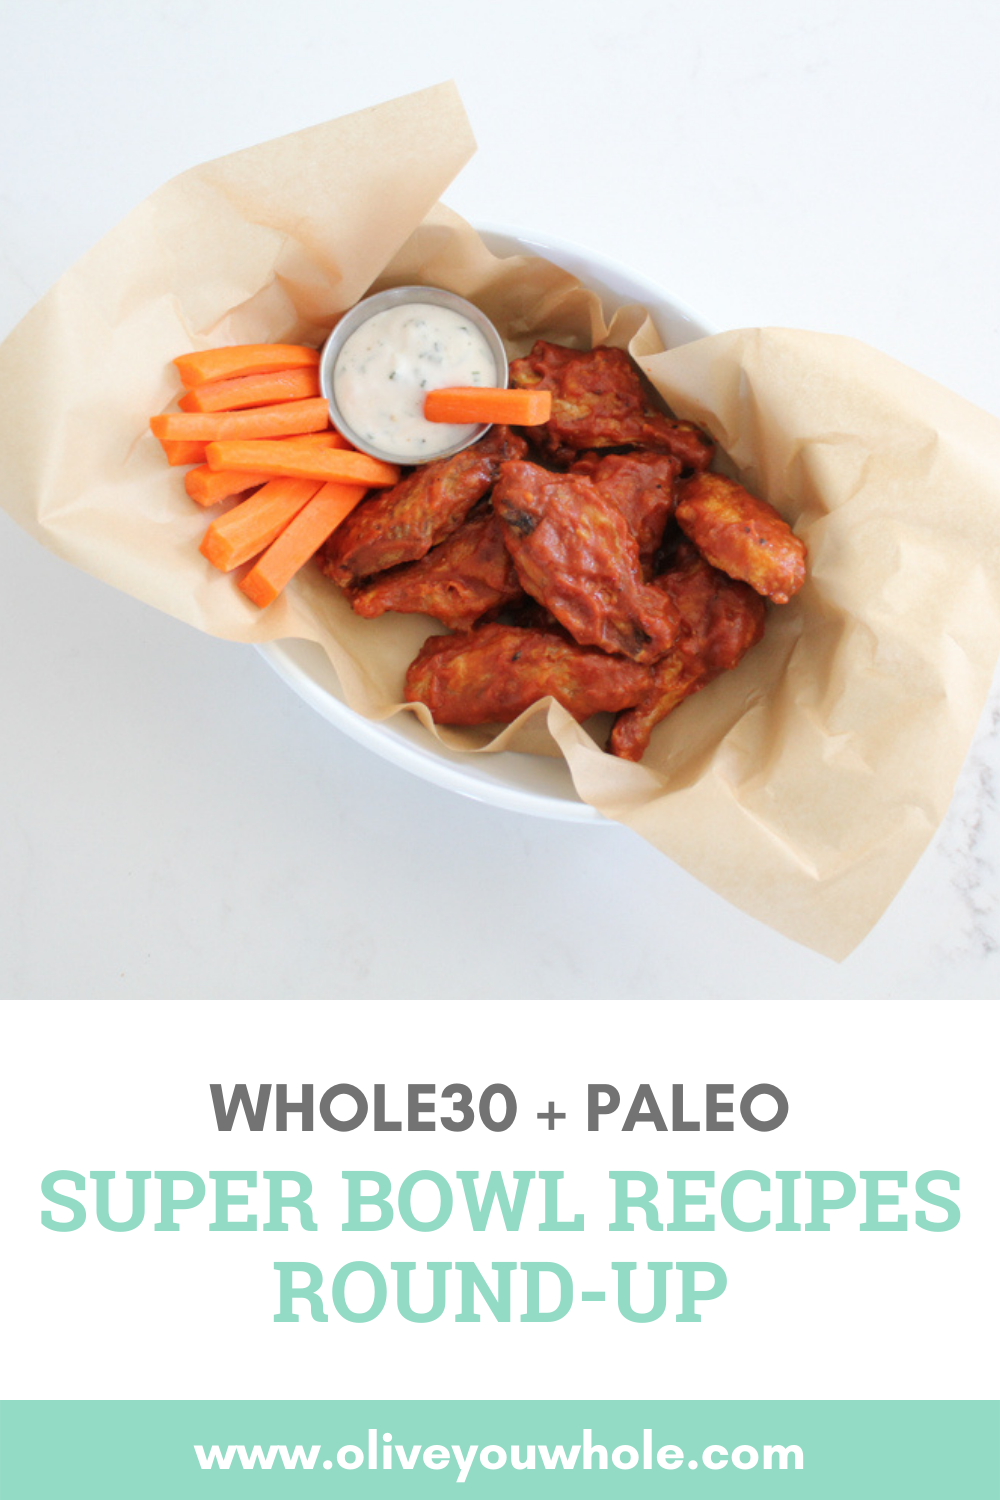 Whole30 + Paleo Super Bowl Recipes Round-Up Pinterest